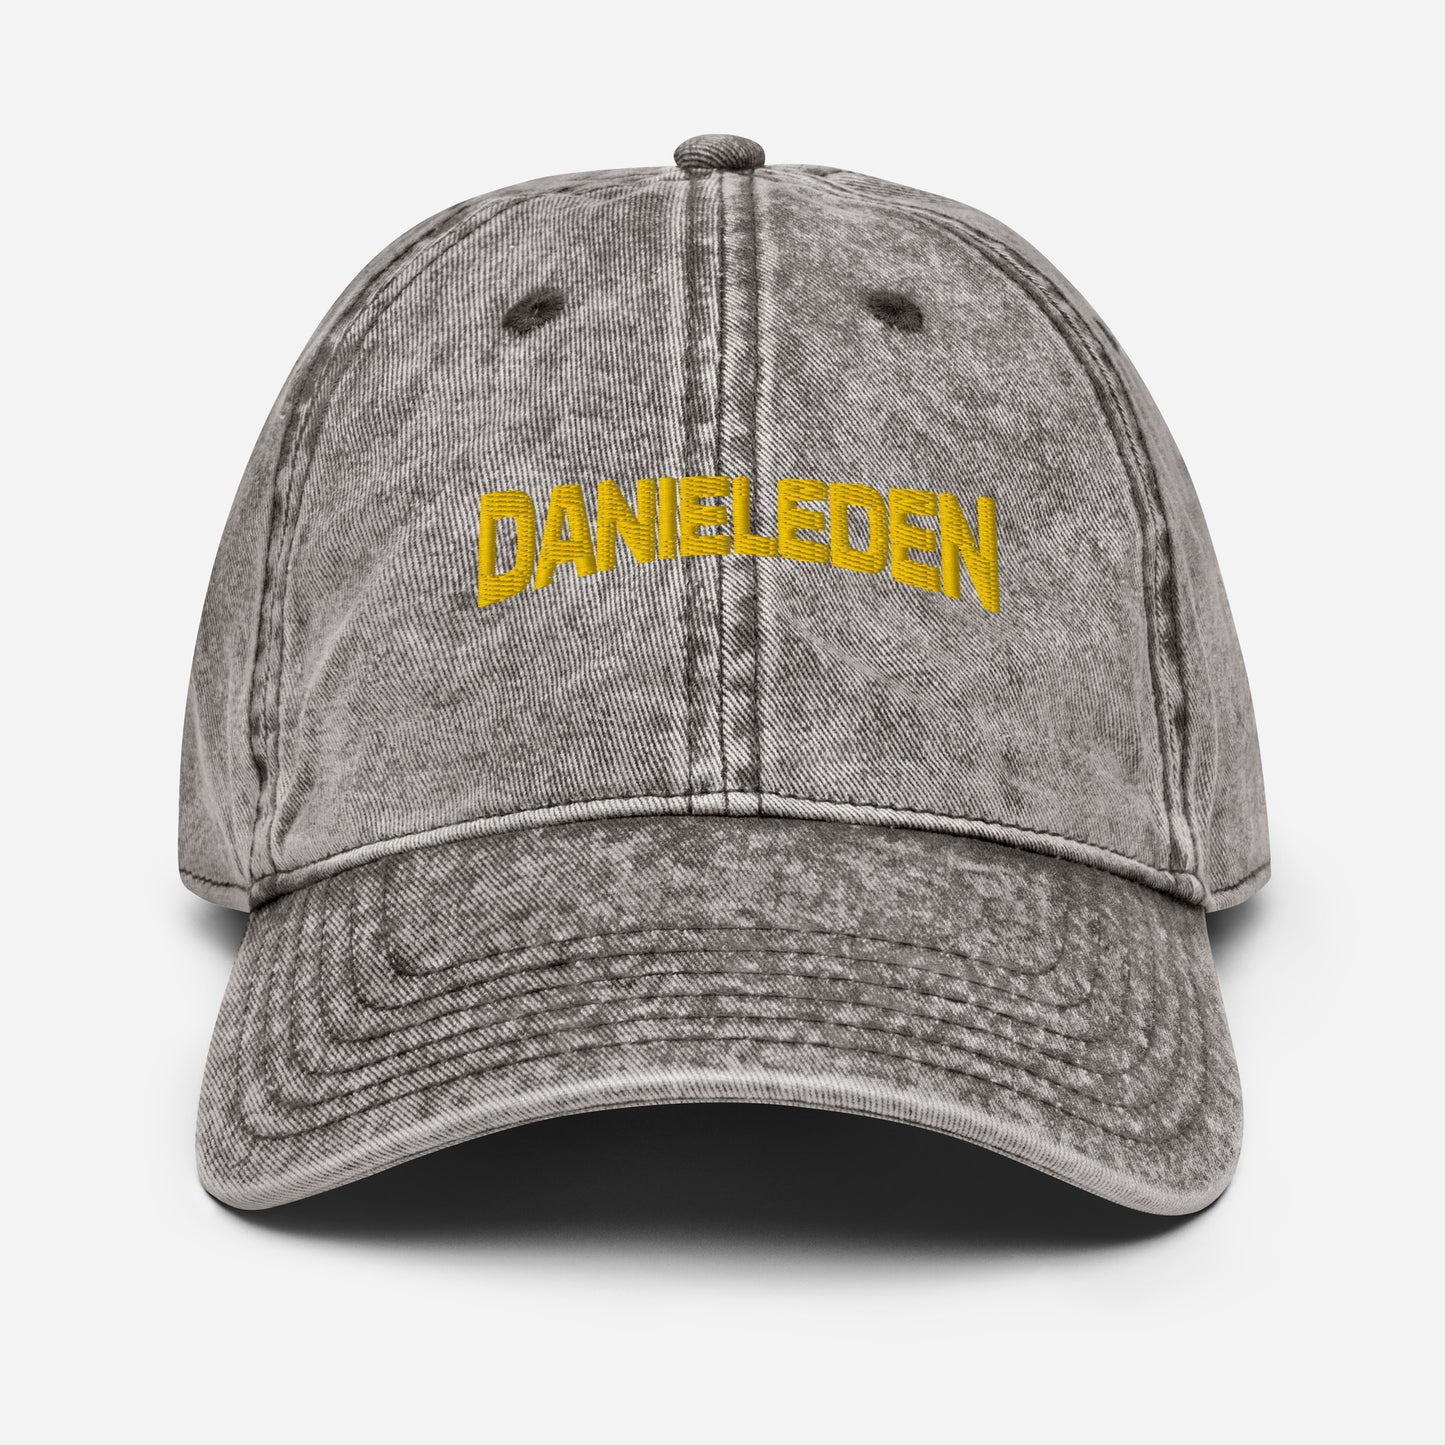 DanielEden Vintage Cap